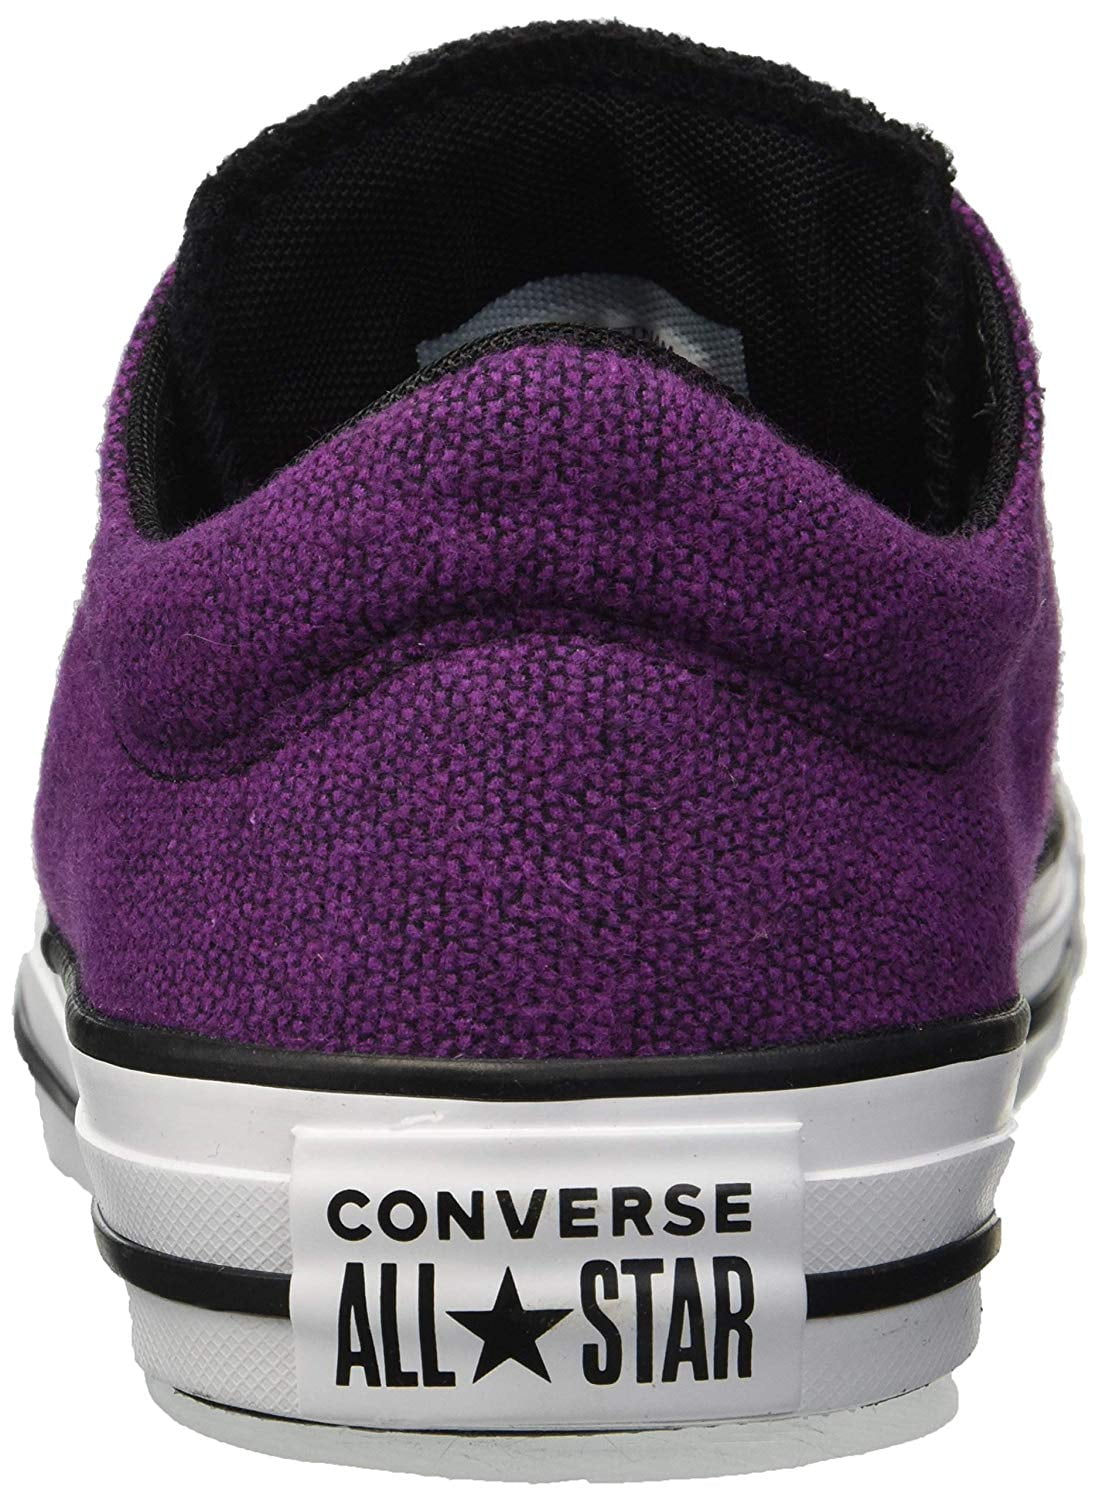 converse madison purple